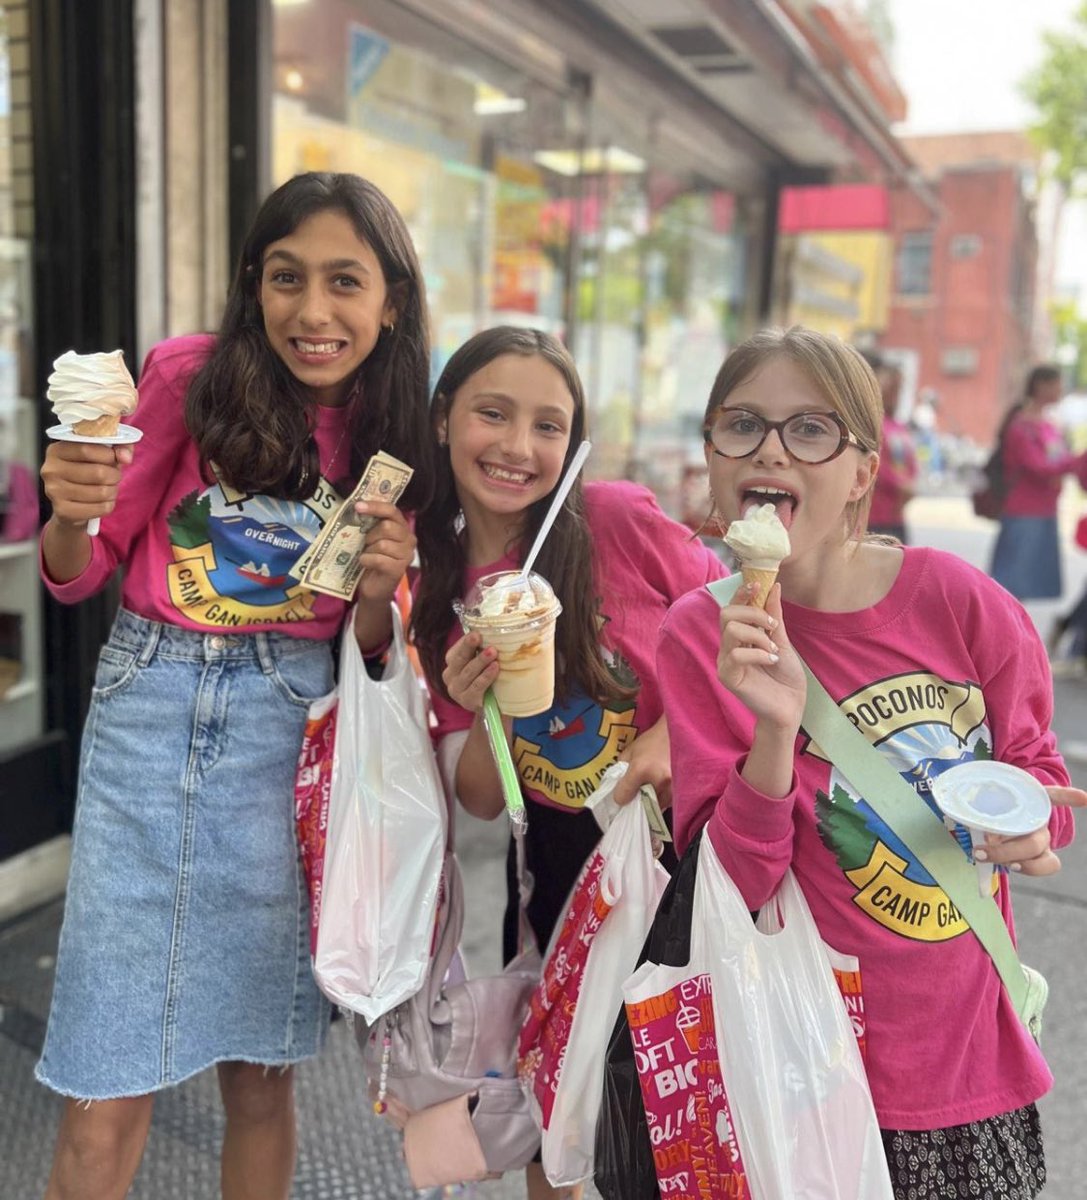 Happy National “Kosher” Ice Cream Cone Day! 🍦💫

#nationalicecreamconeday #sweetexpressions #ilovecamp #crownheights #cgipoconos #chabad #campganisreal #summercamp #jewishovernightcamp #icecream